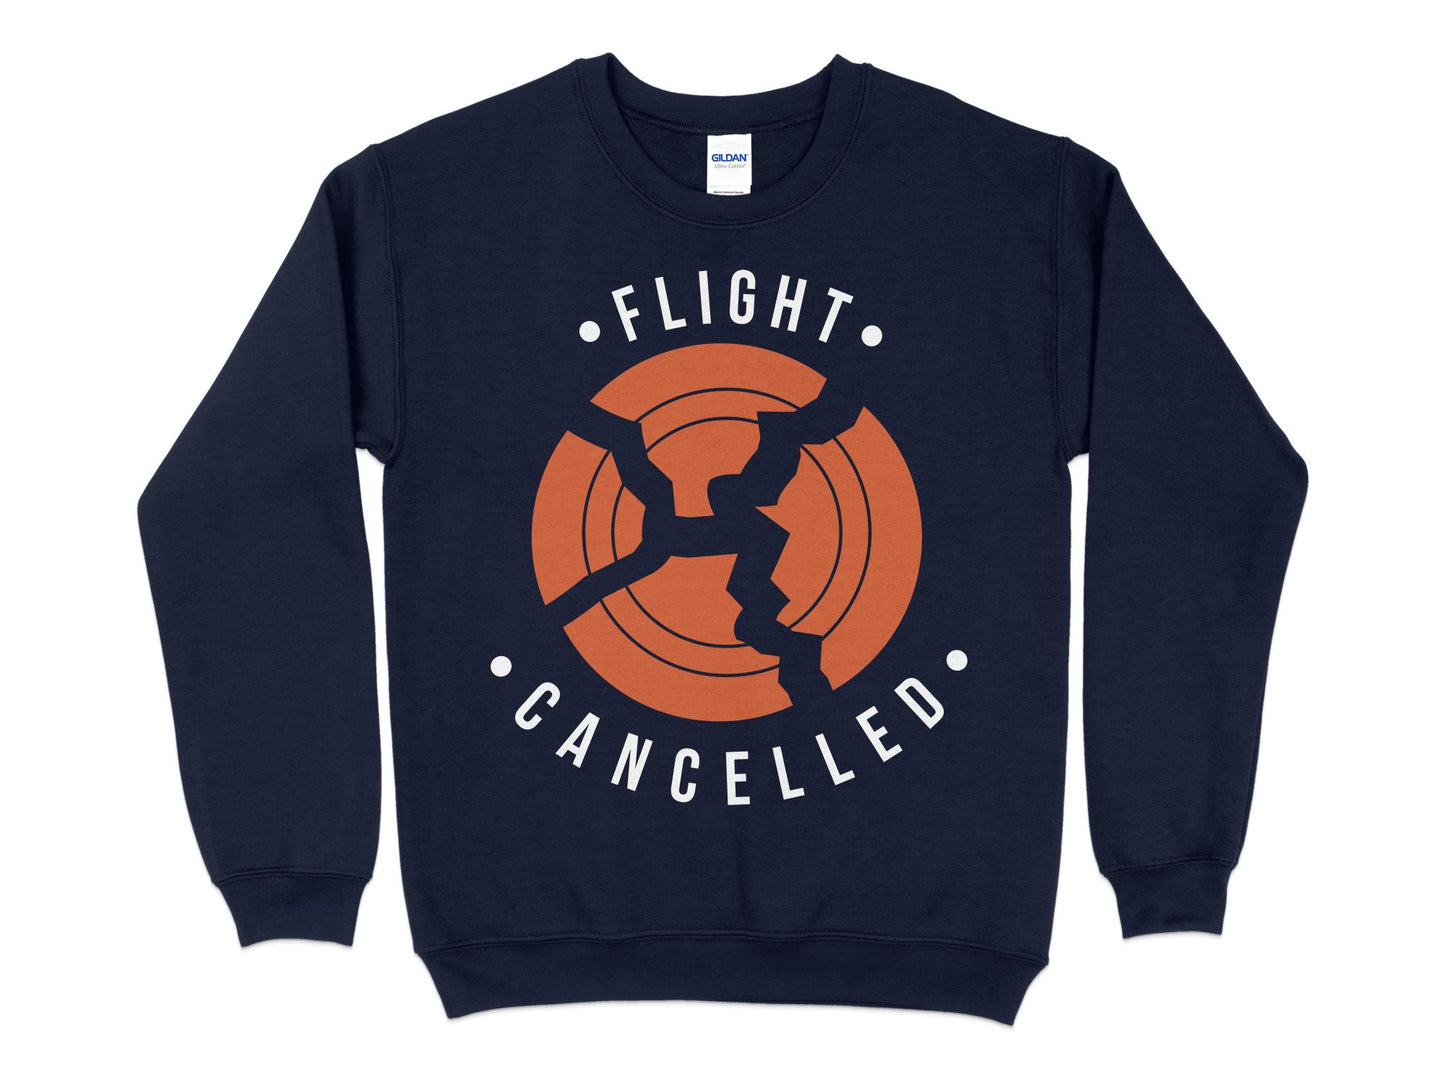 Trap Shooting Sweatshirt - Flight Cancelled, navy blue